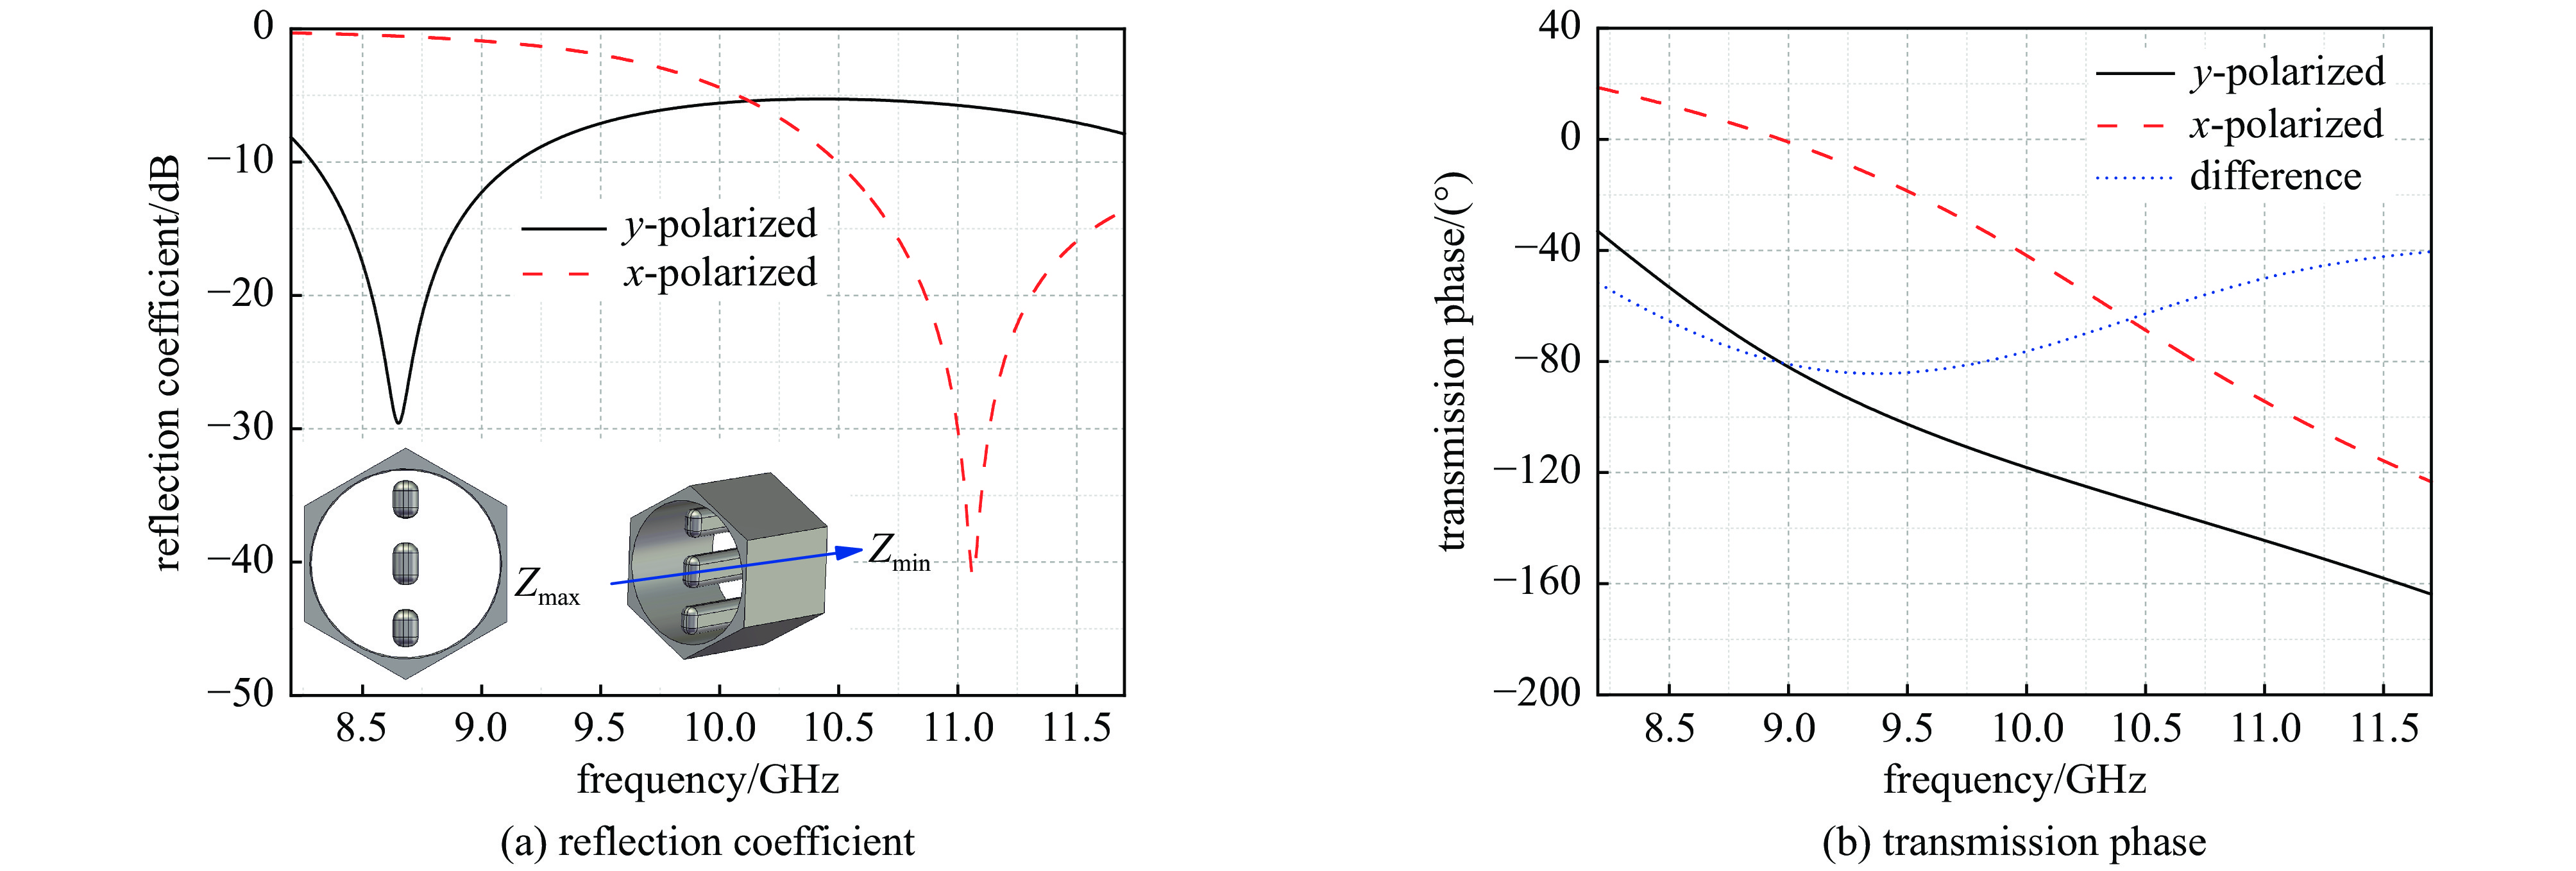 Transmission model analysis of the trident-shaped reflectarray antenna element